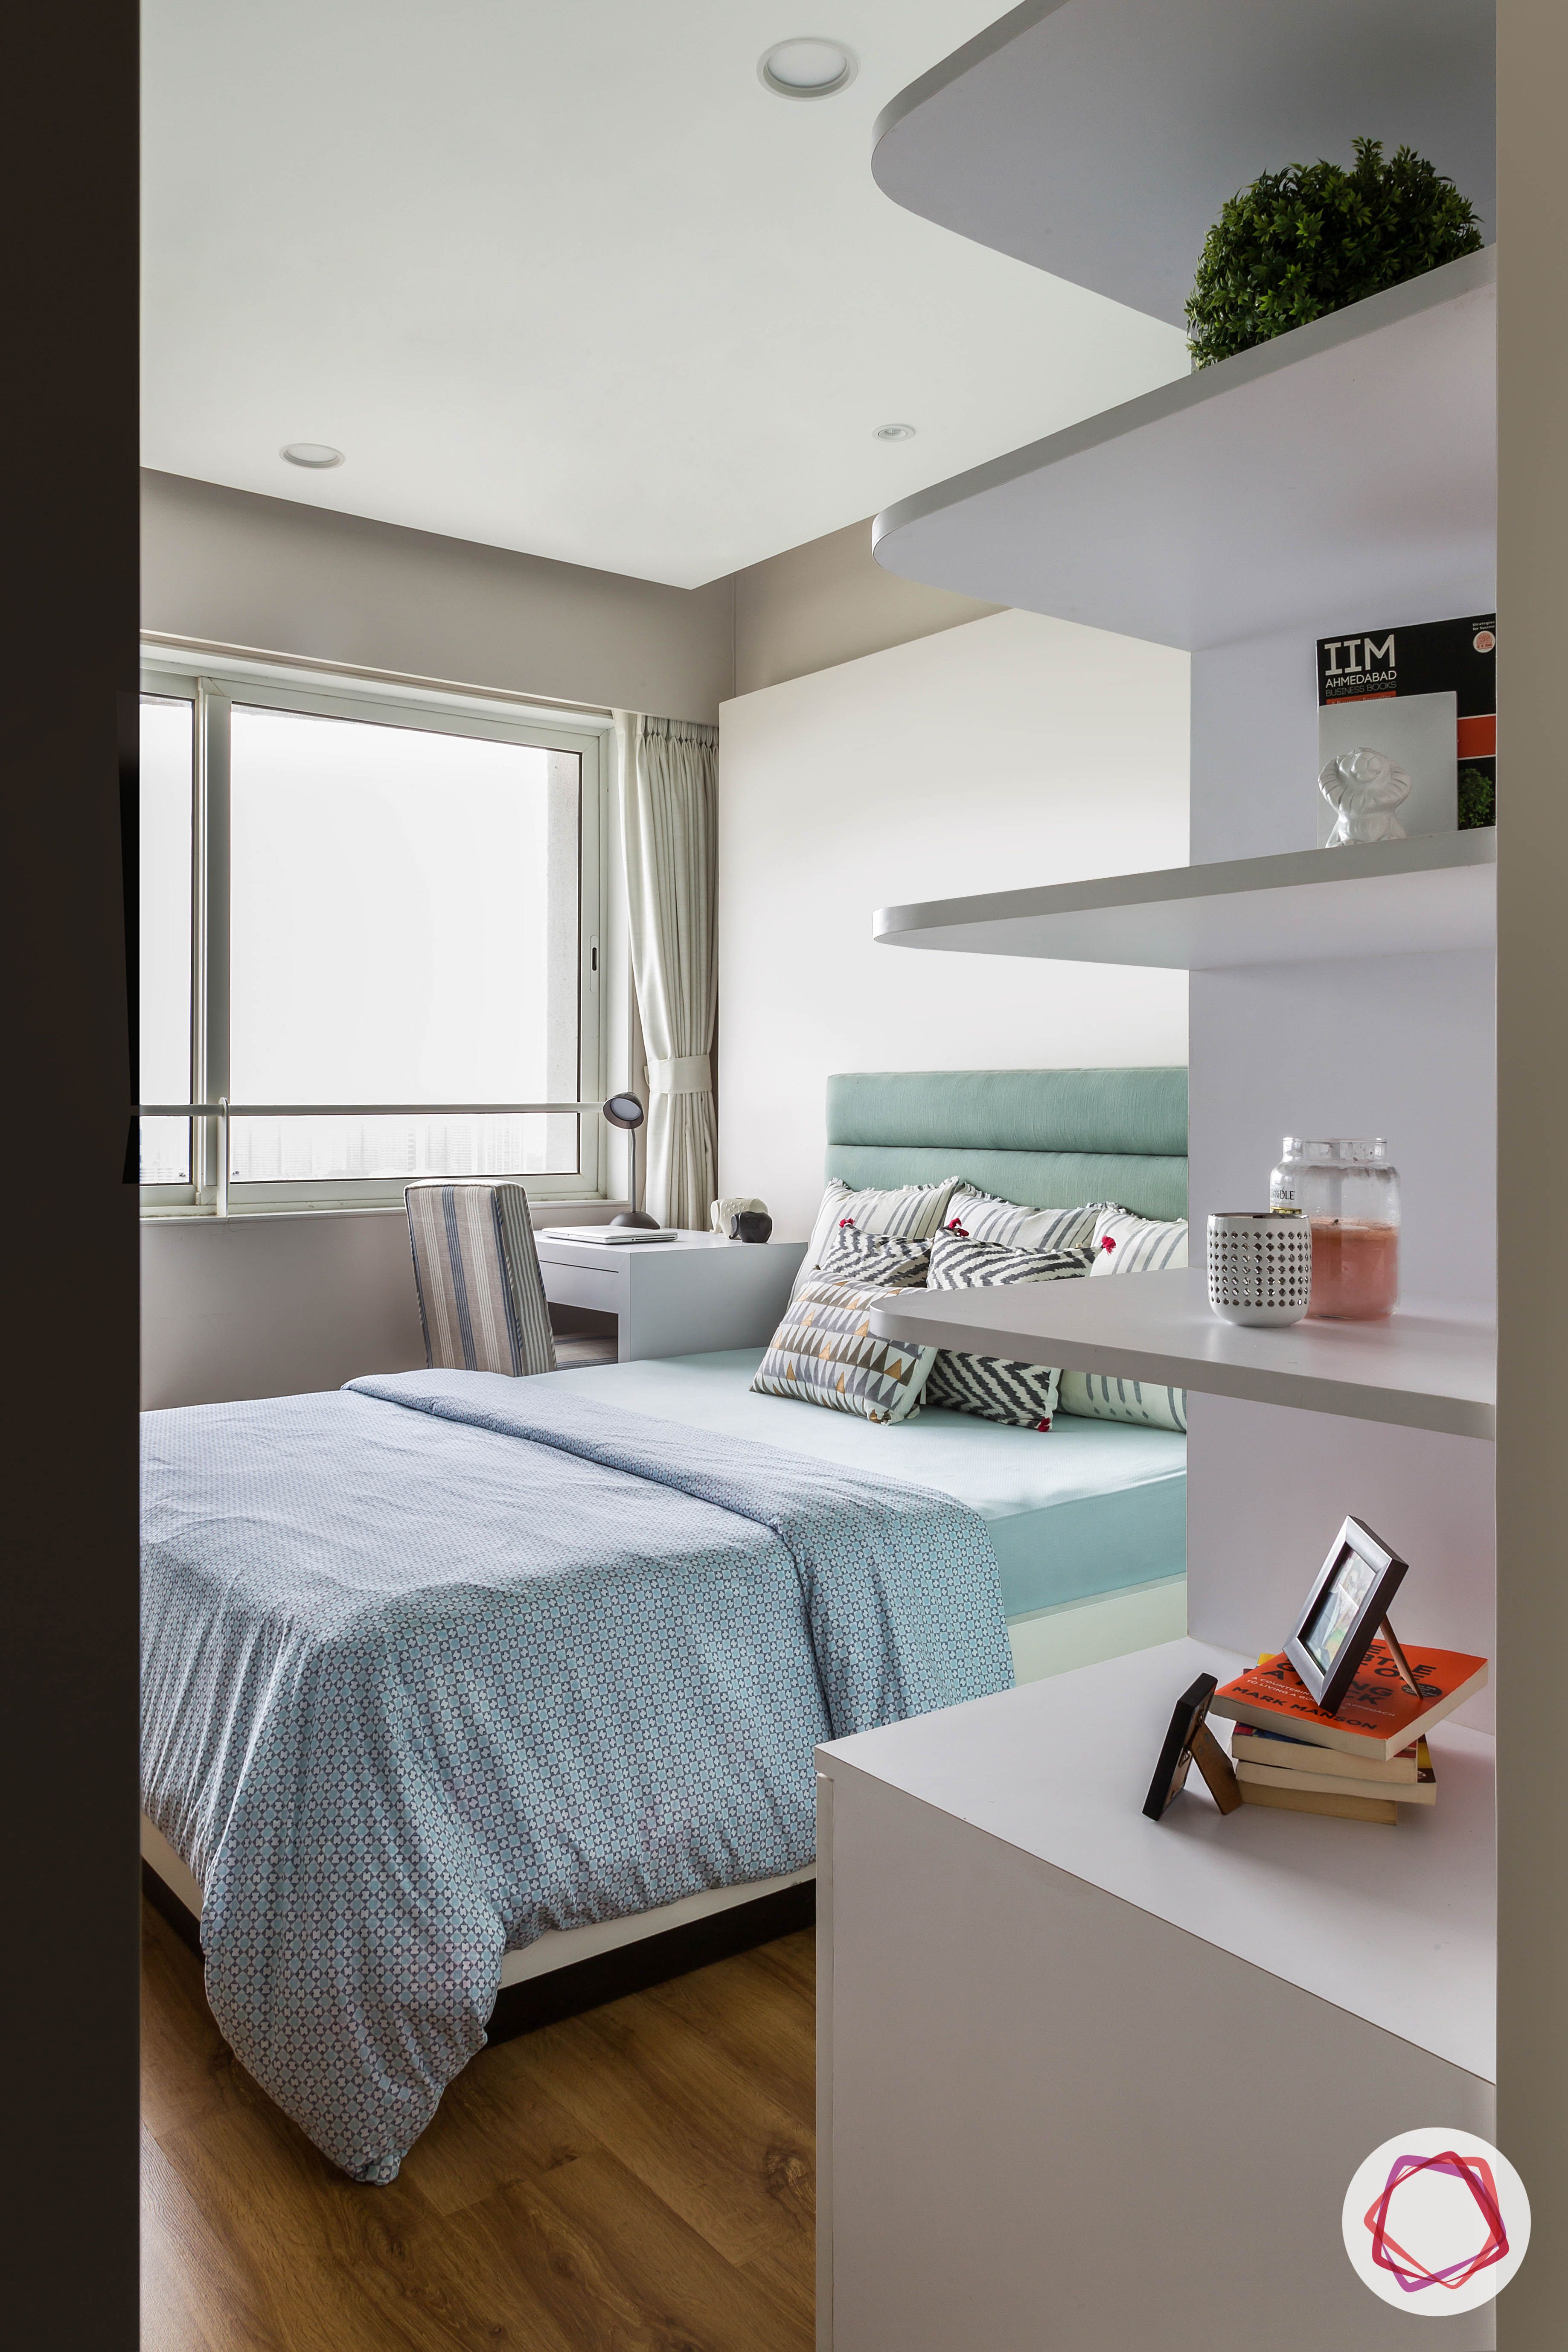 lodha group-simple bedroom designs-white shelves-shelves with wardrobe